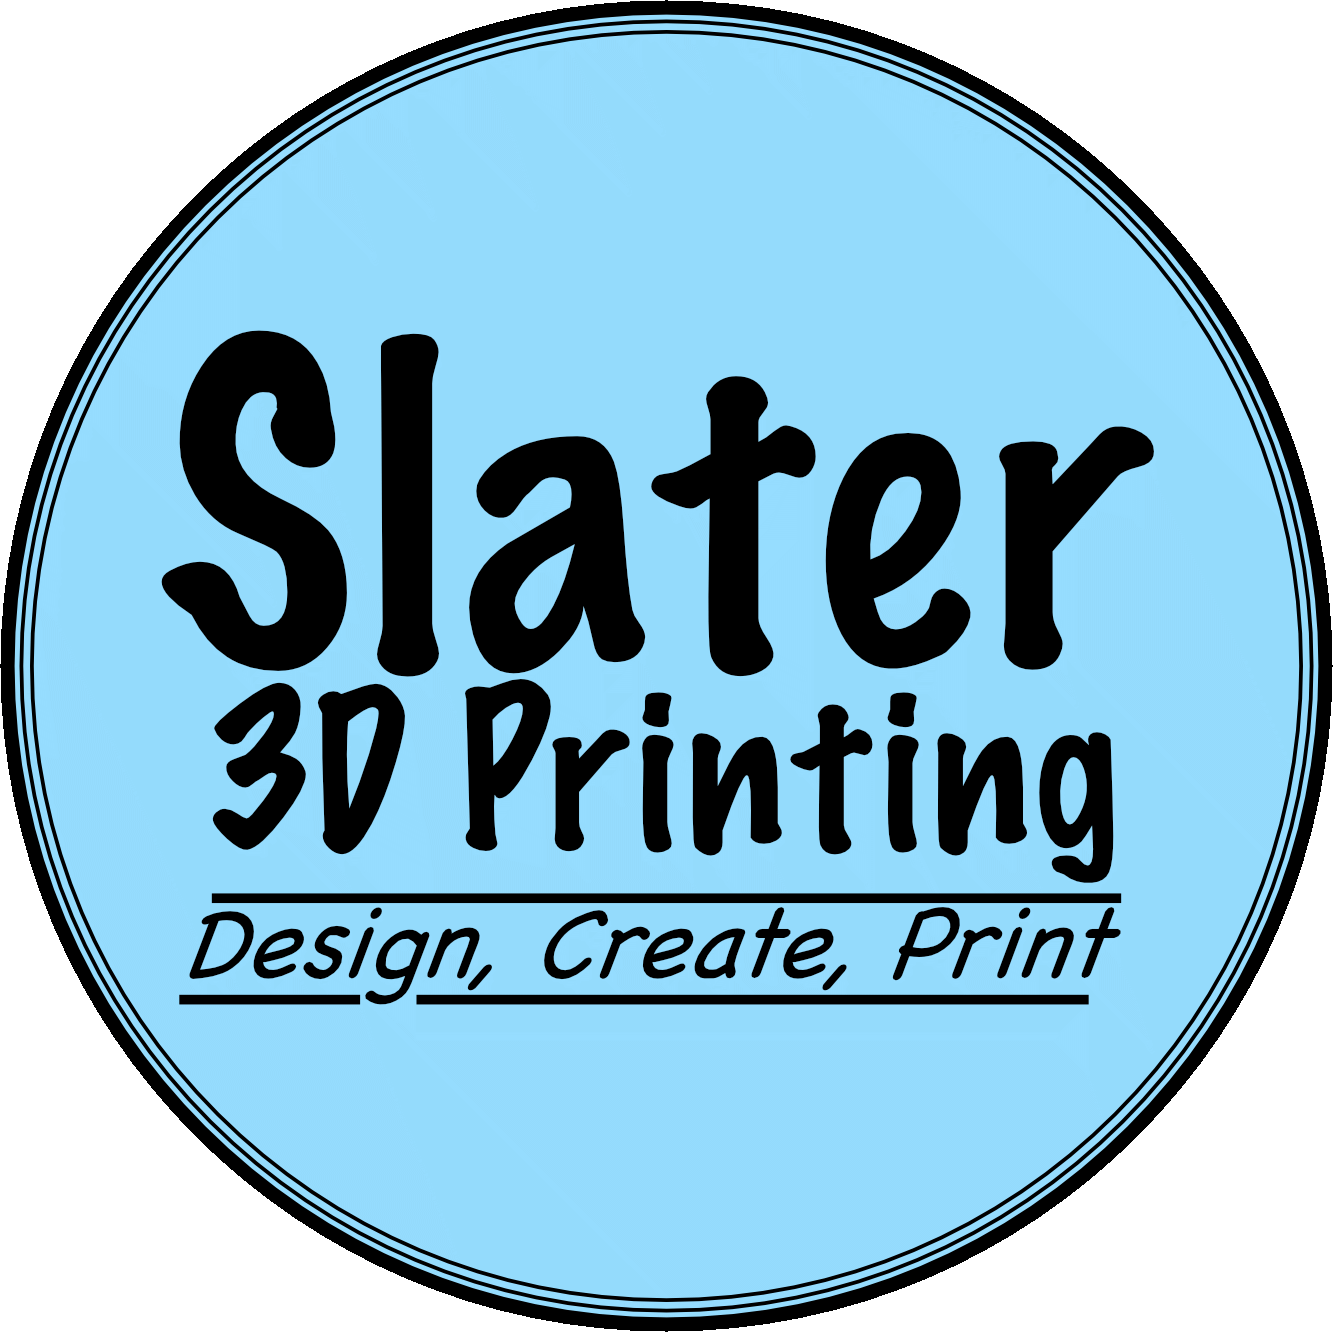 Slater 3D Printing